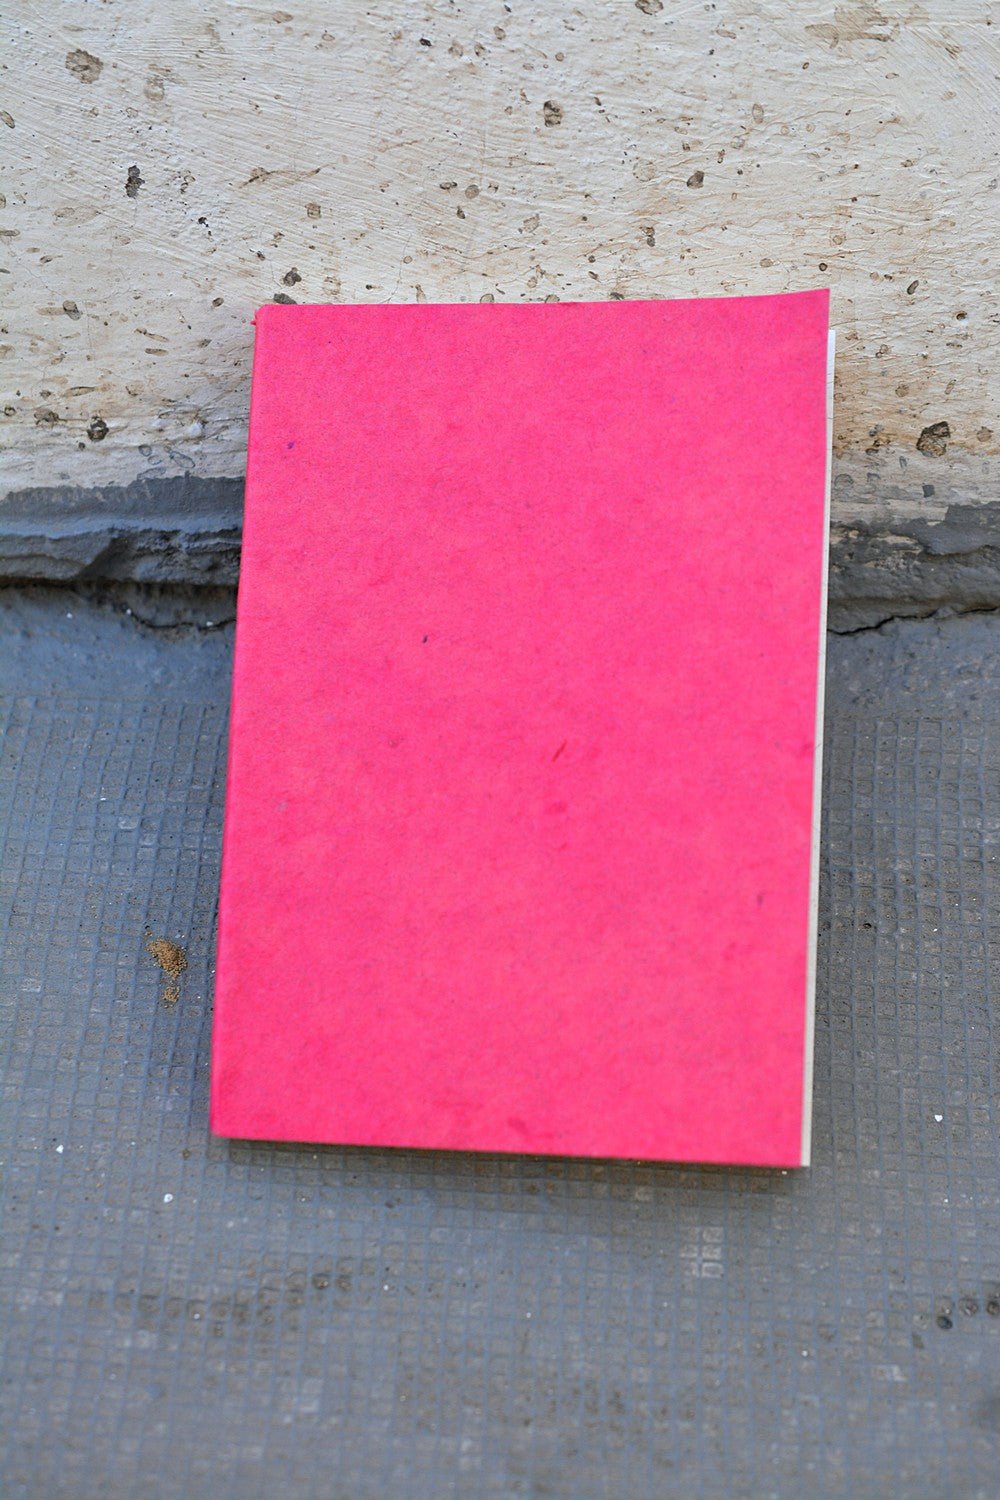 Handmade Paper Notebook. - metaphorracha